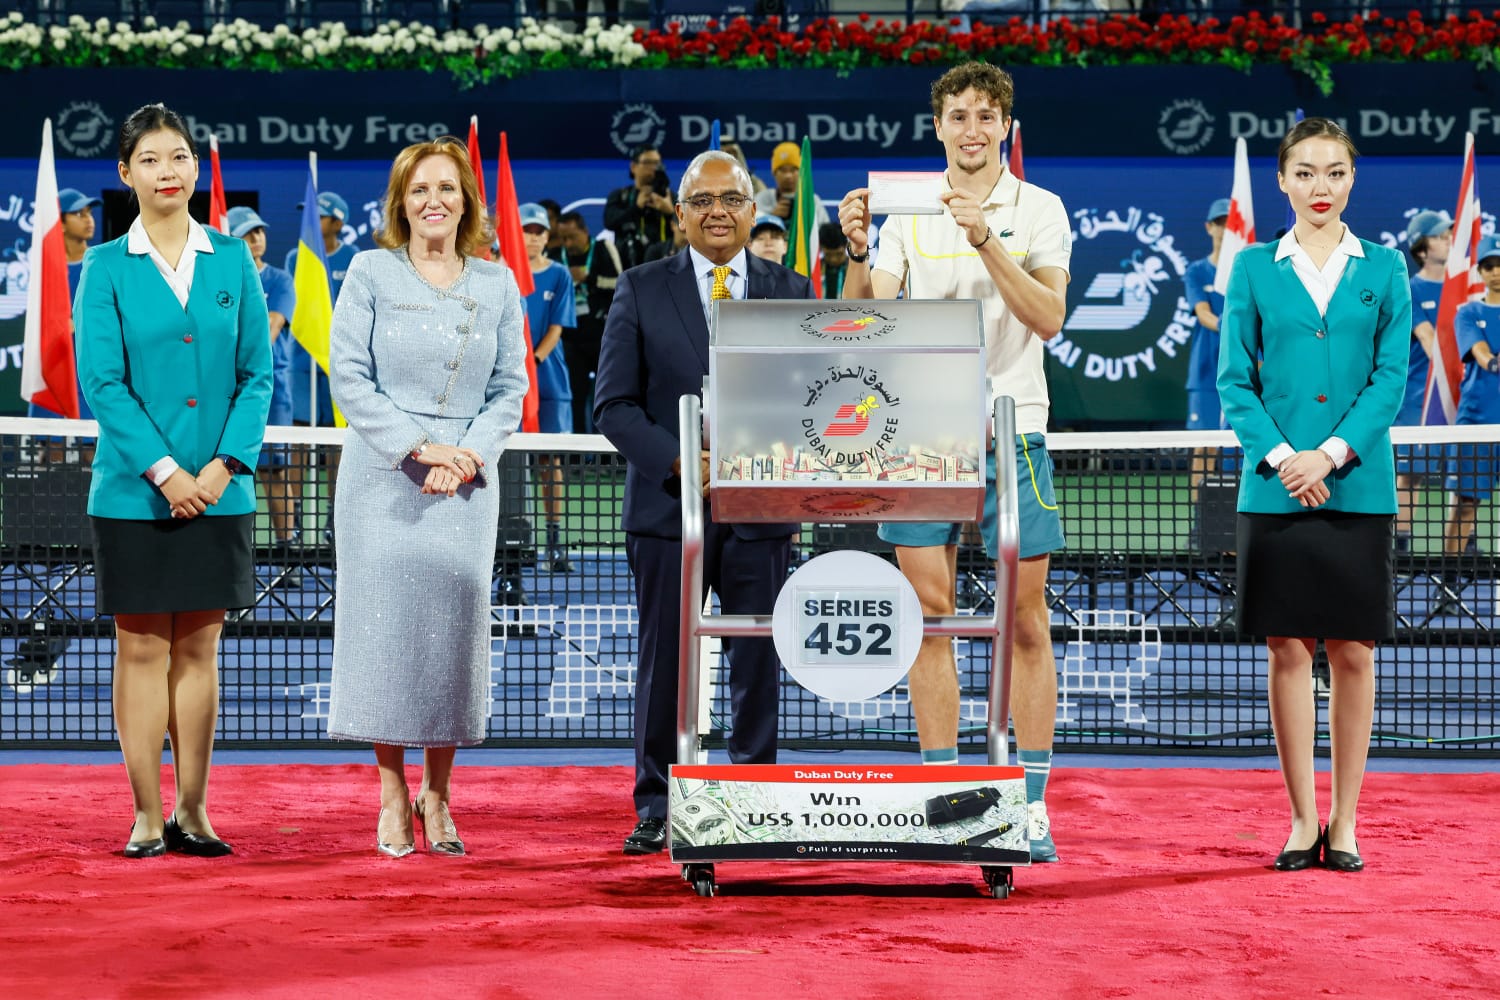 Indian Expat Strikes Gold: Wins $1 Million in Dubai Duty Free Tennis Draw